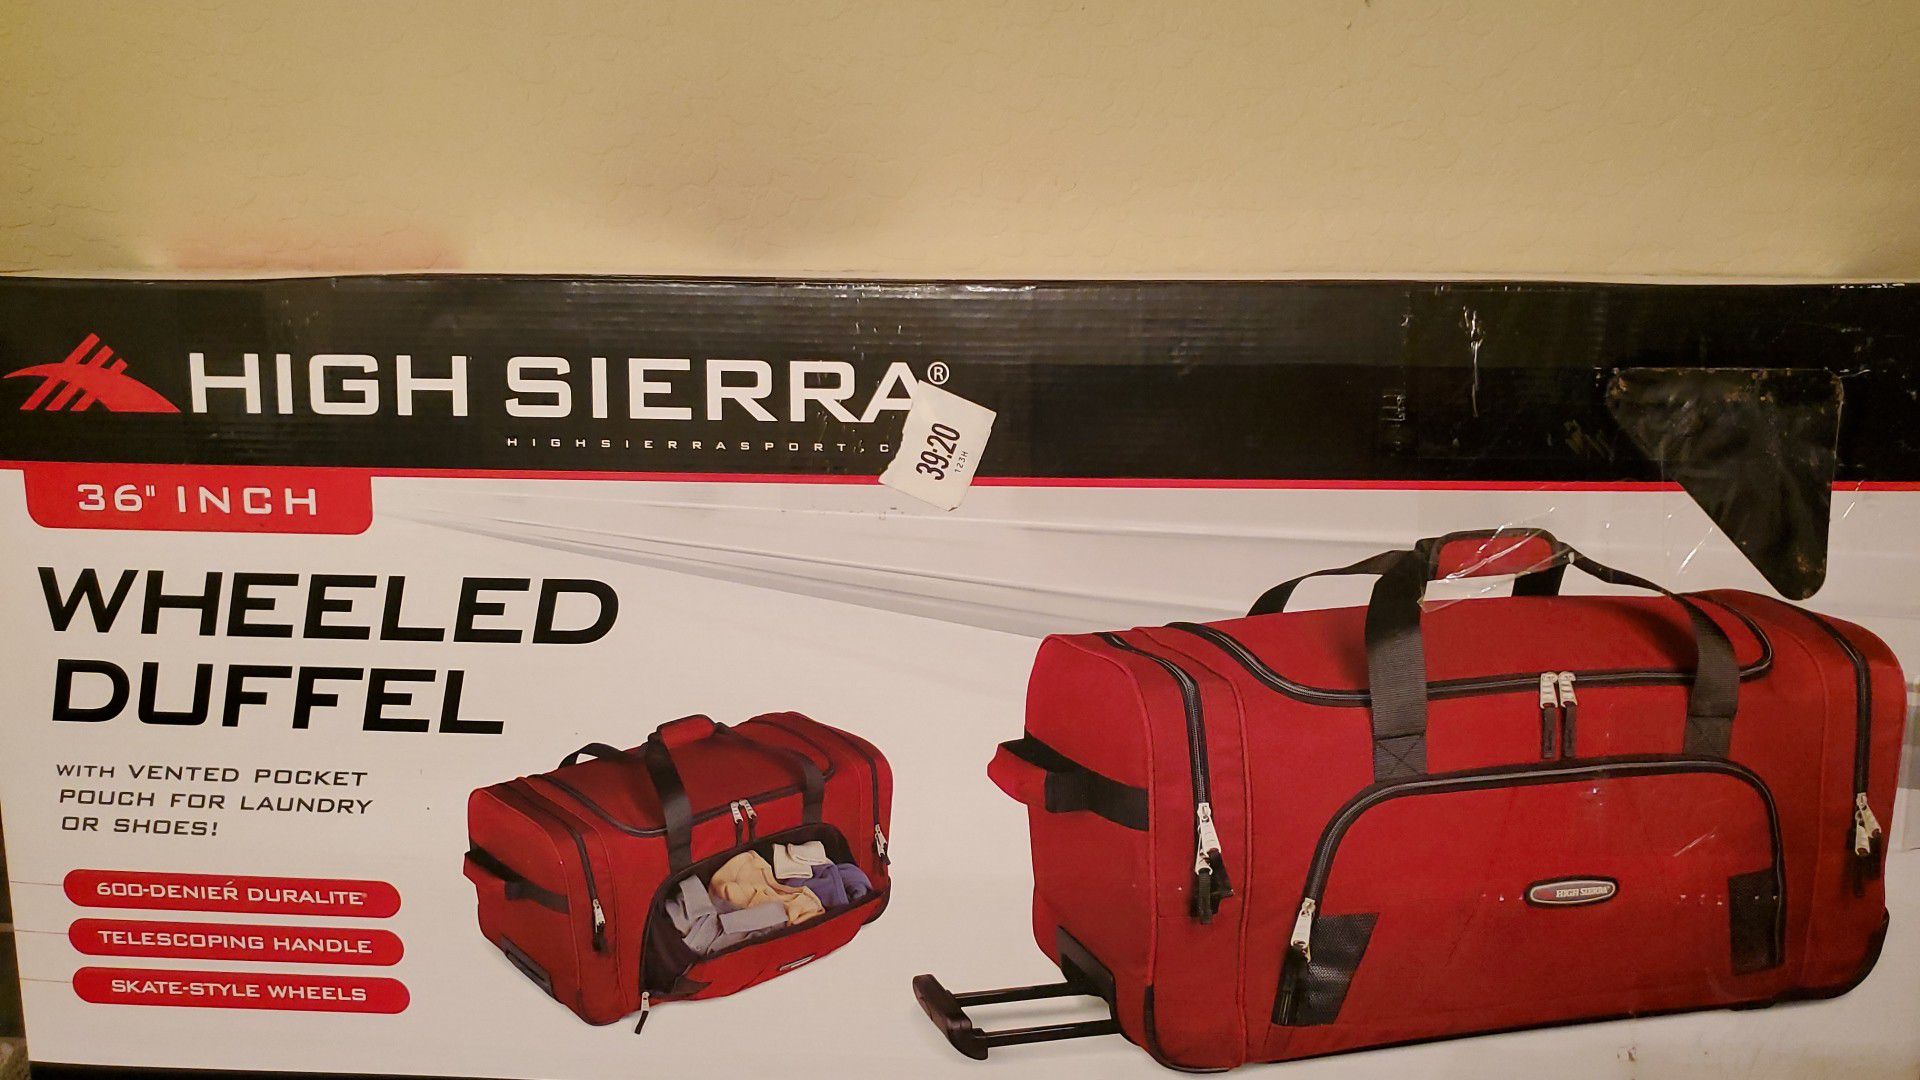 High Sierra 36' wheeled duffle bag